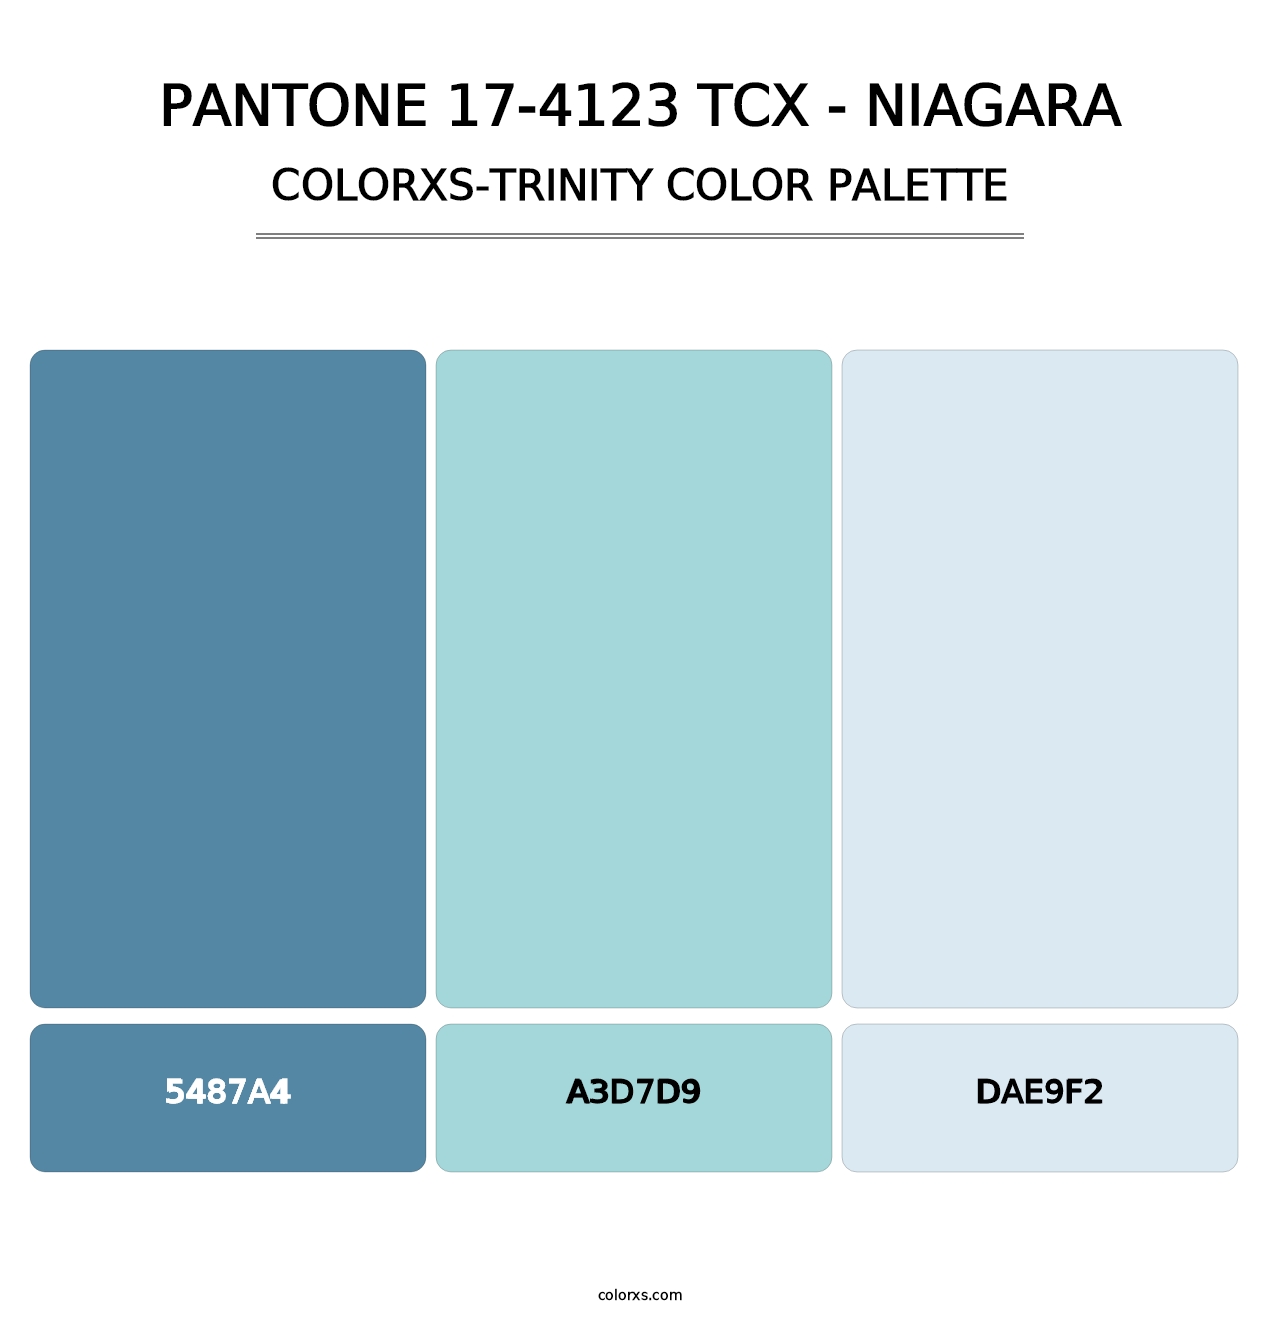 PANTONE 17-4123 TCX - Niagara - Colorxs Trinity Palette